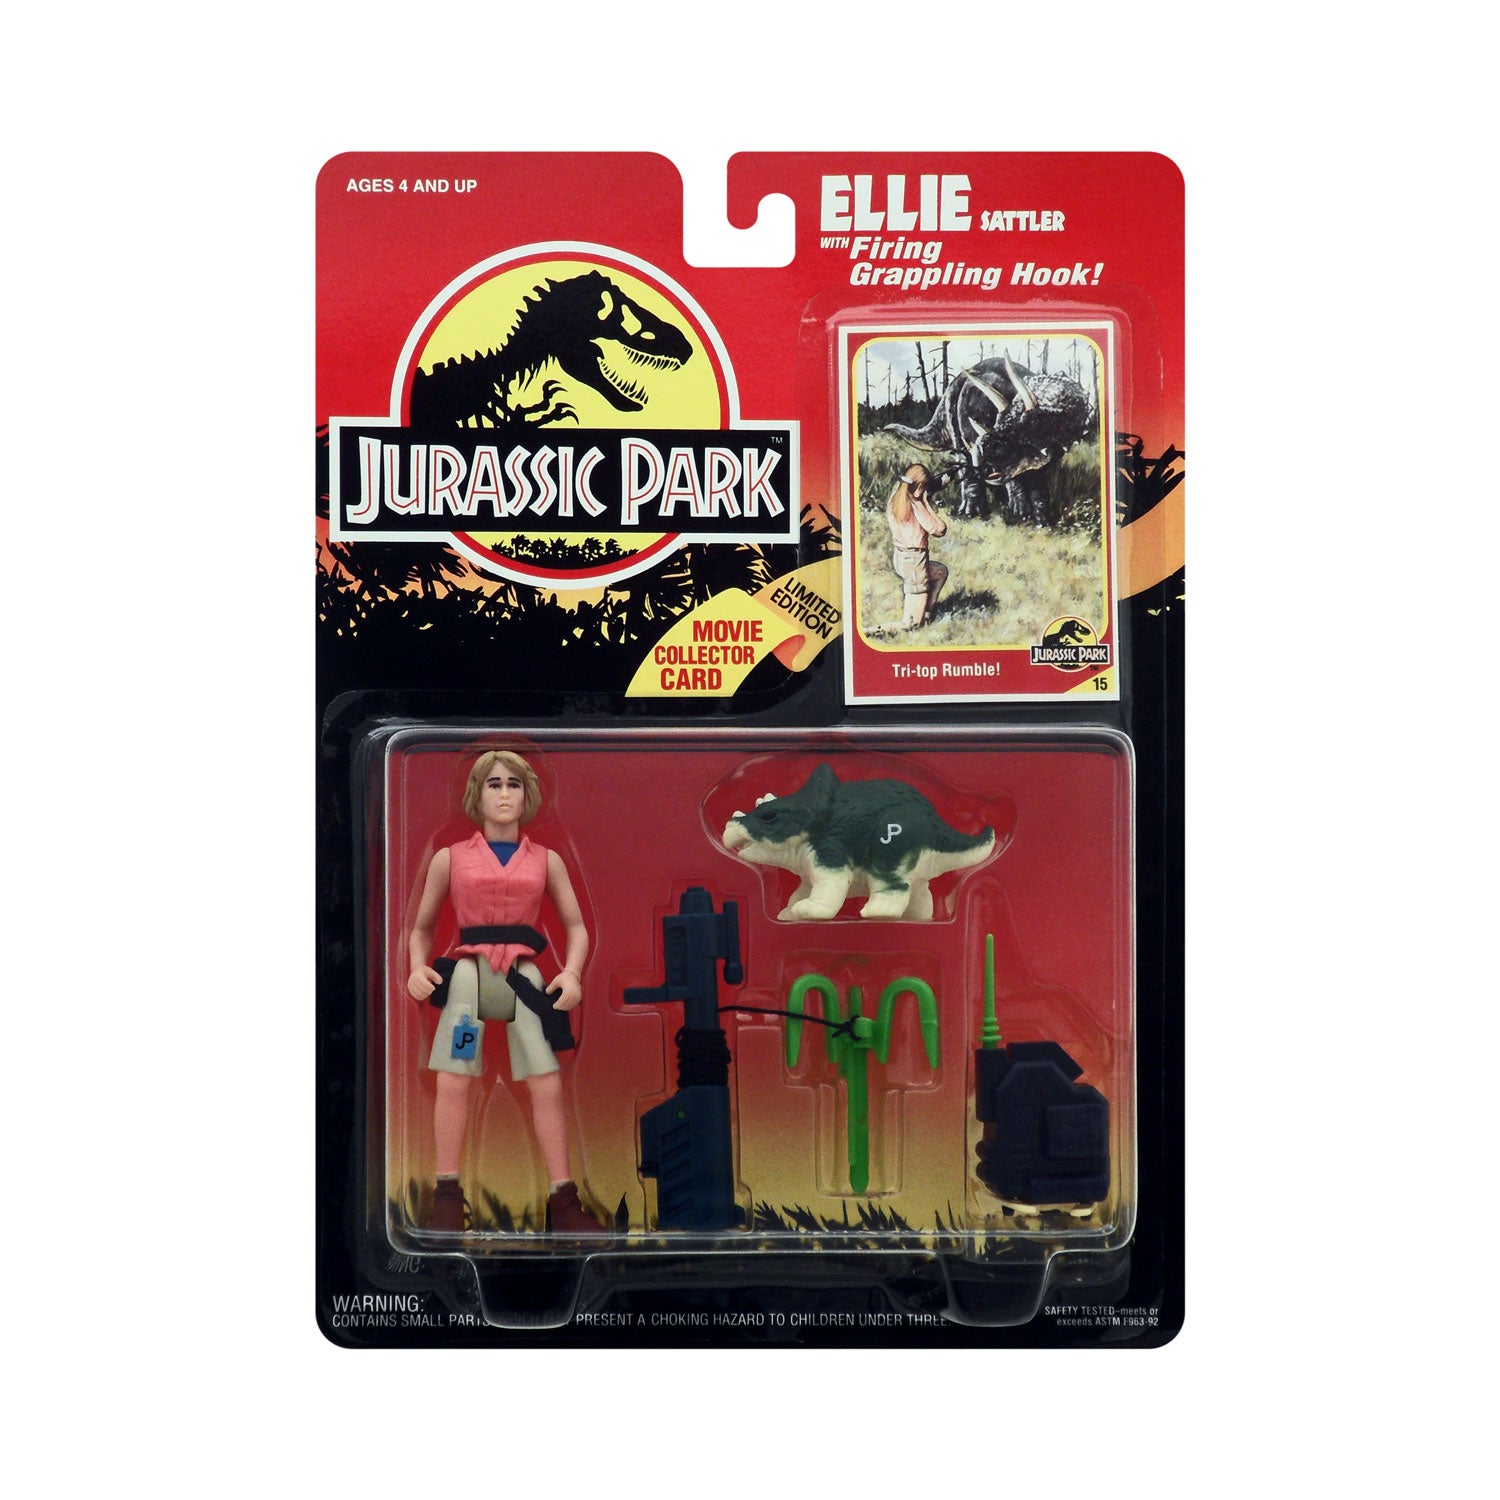 Tim Murphy - figurine Jurassic Park - Kenner